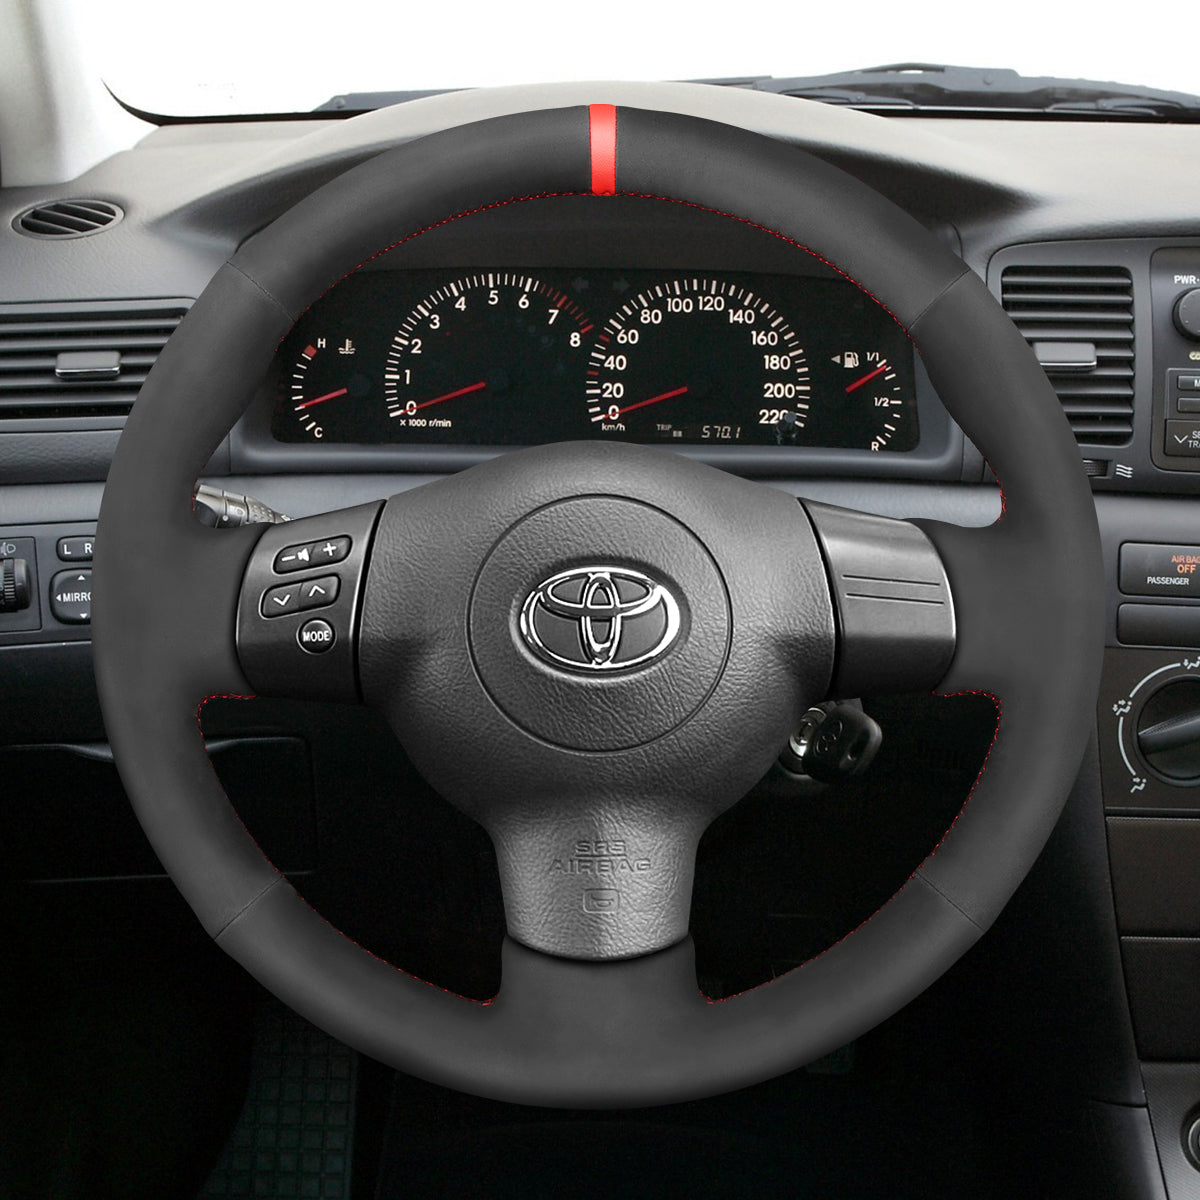 MEWANT Hand Stitch Balck Suede Car Steering Wheel Cover for Toyota Corolla Caldina RAV4 Wish for Scion tC xA xB